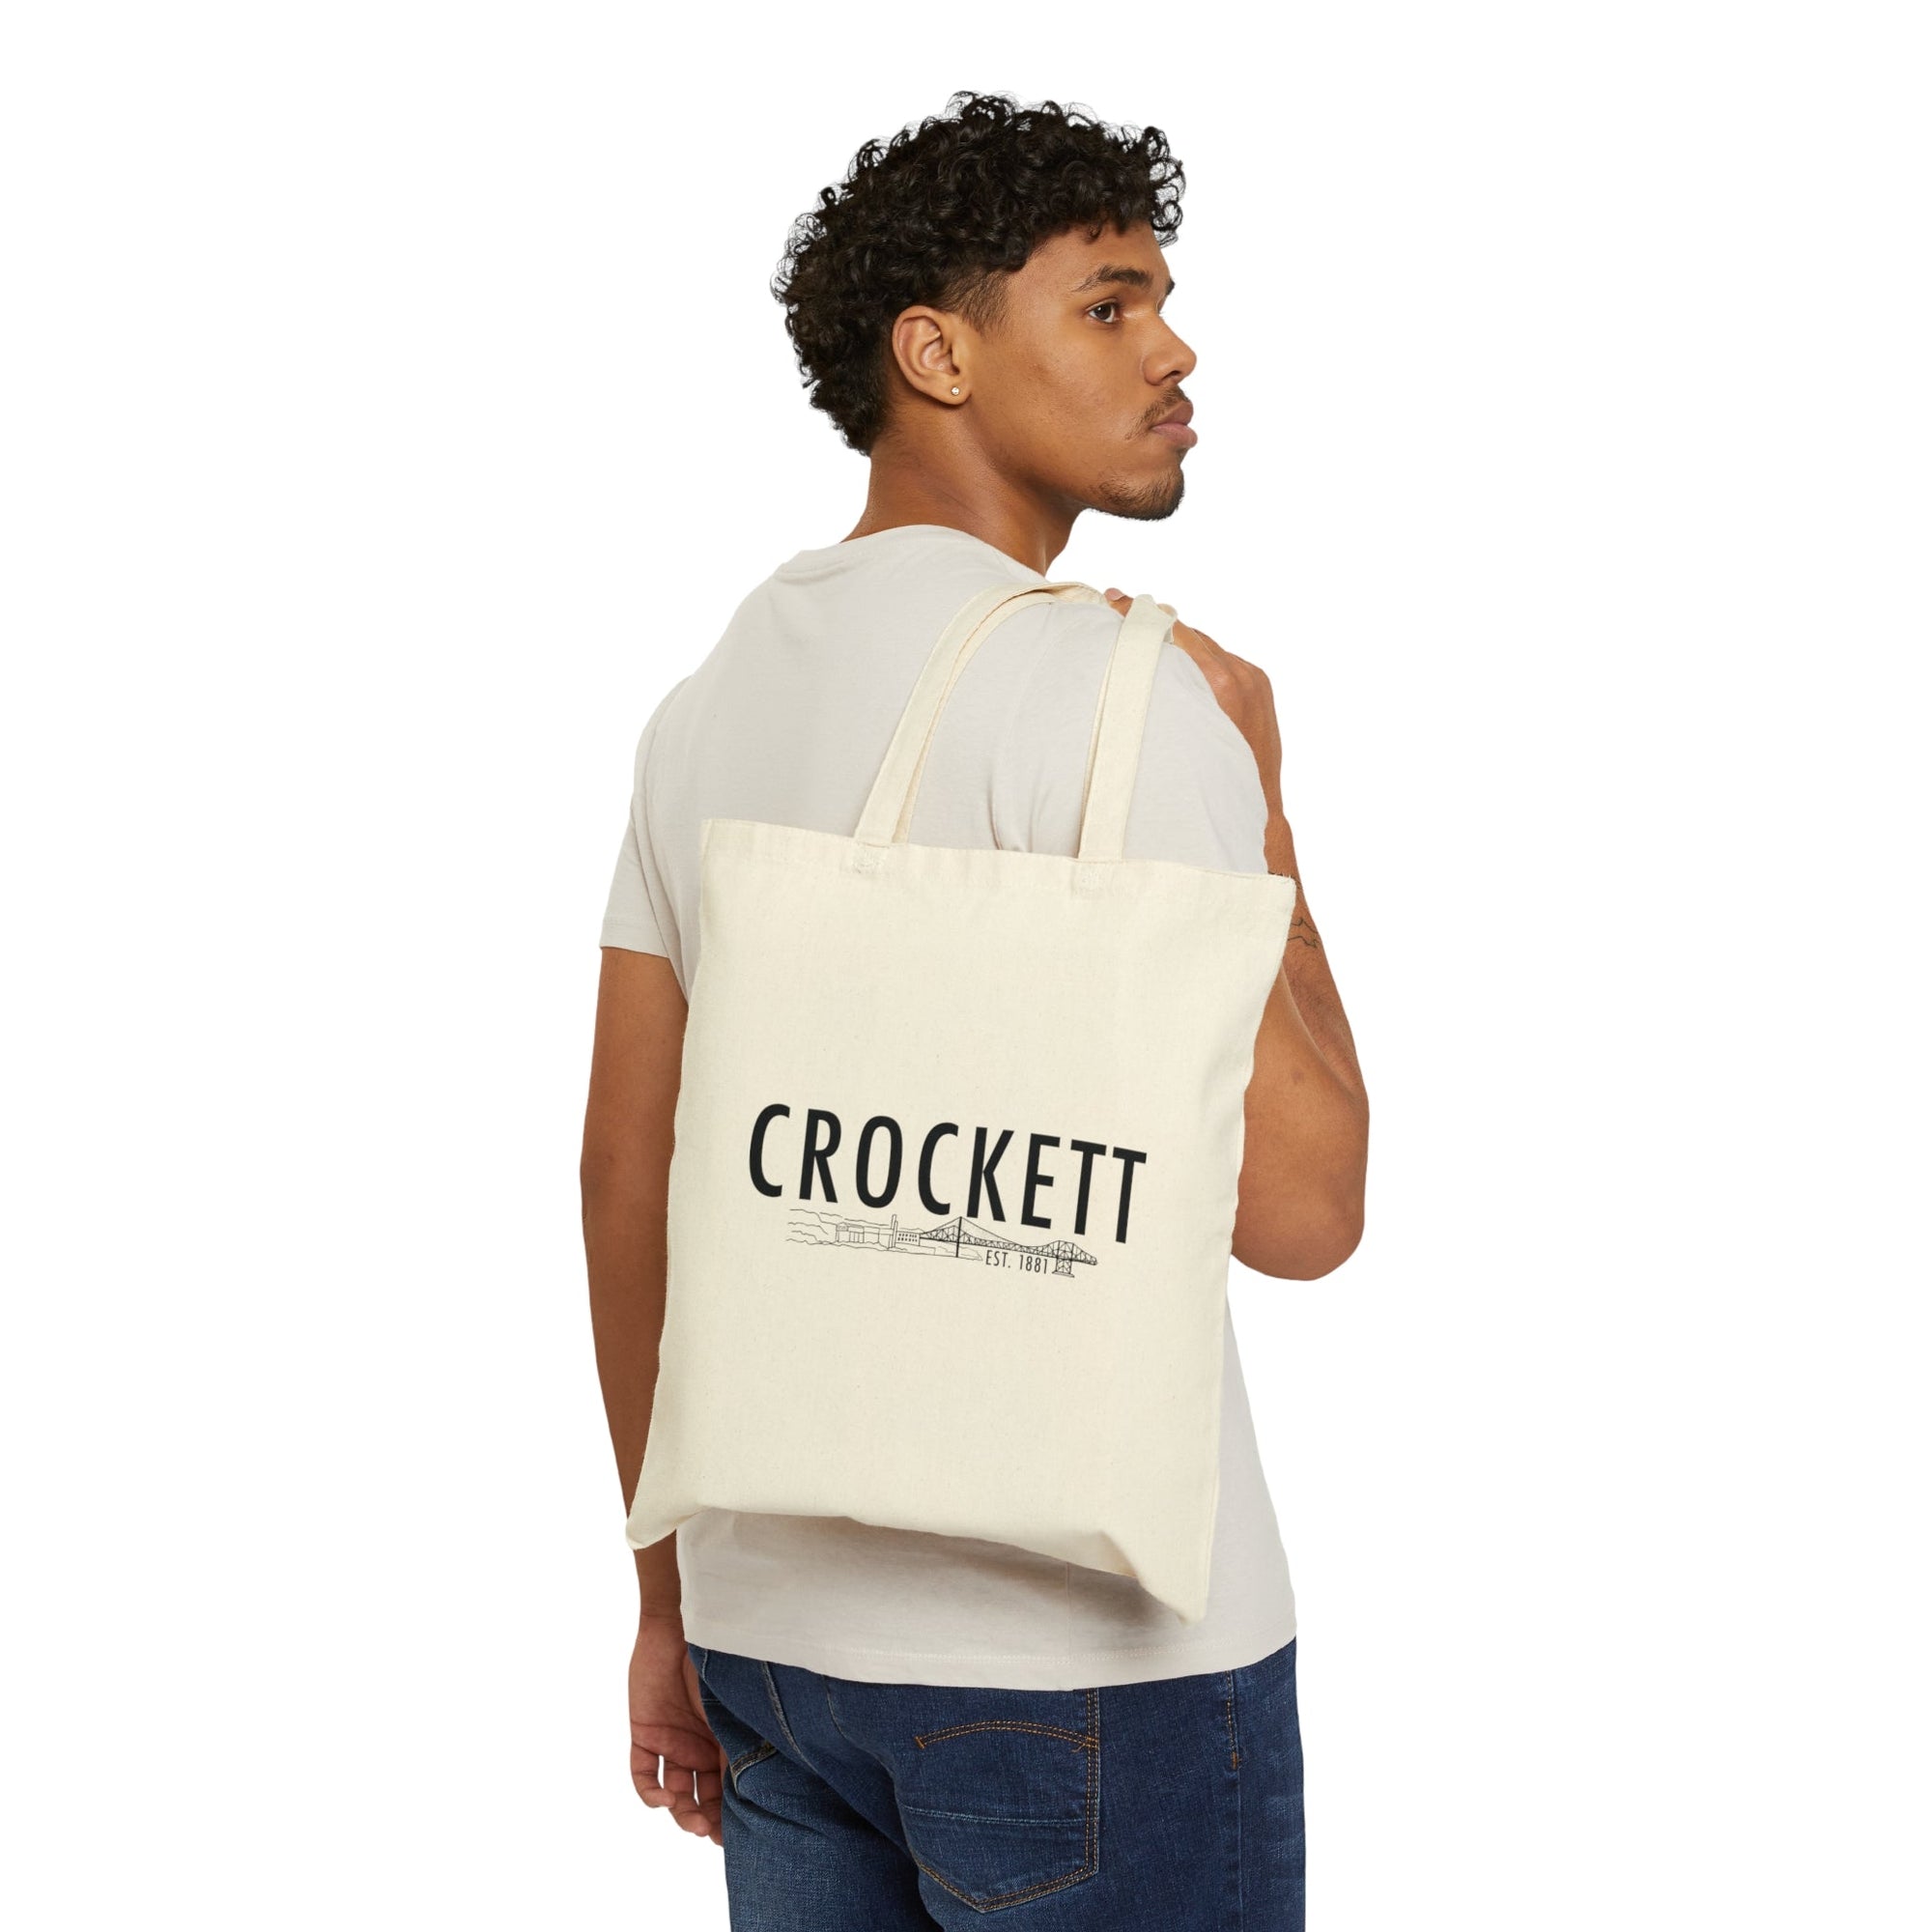 Crockett- Cotton Canvas Tote Bag